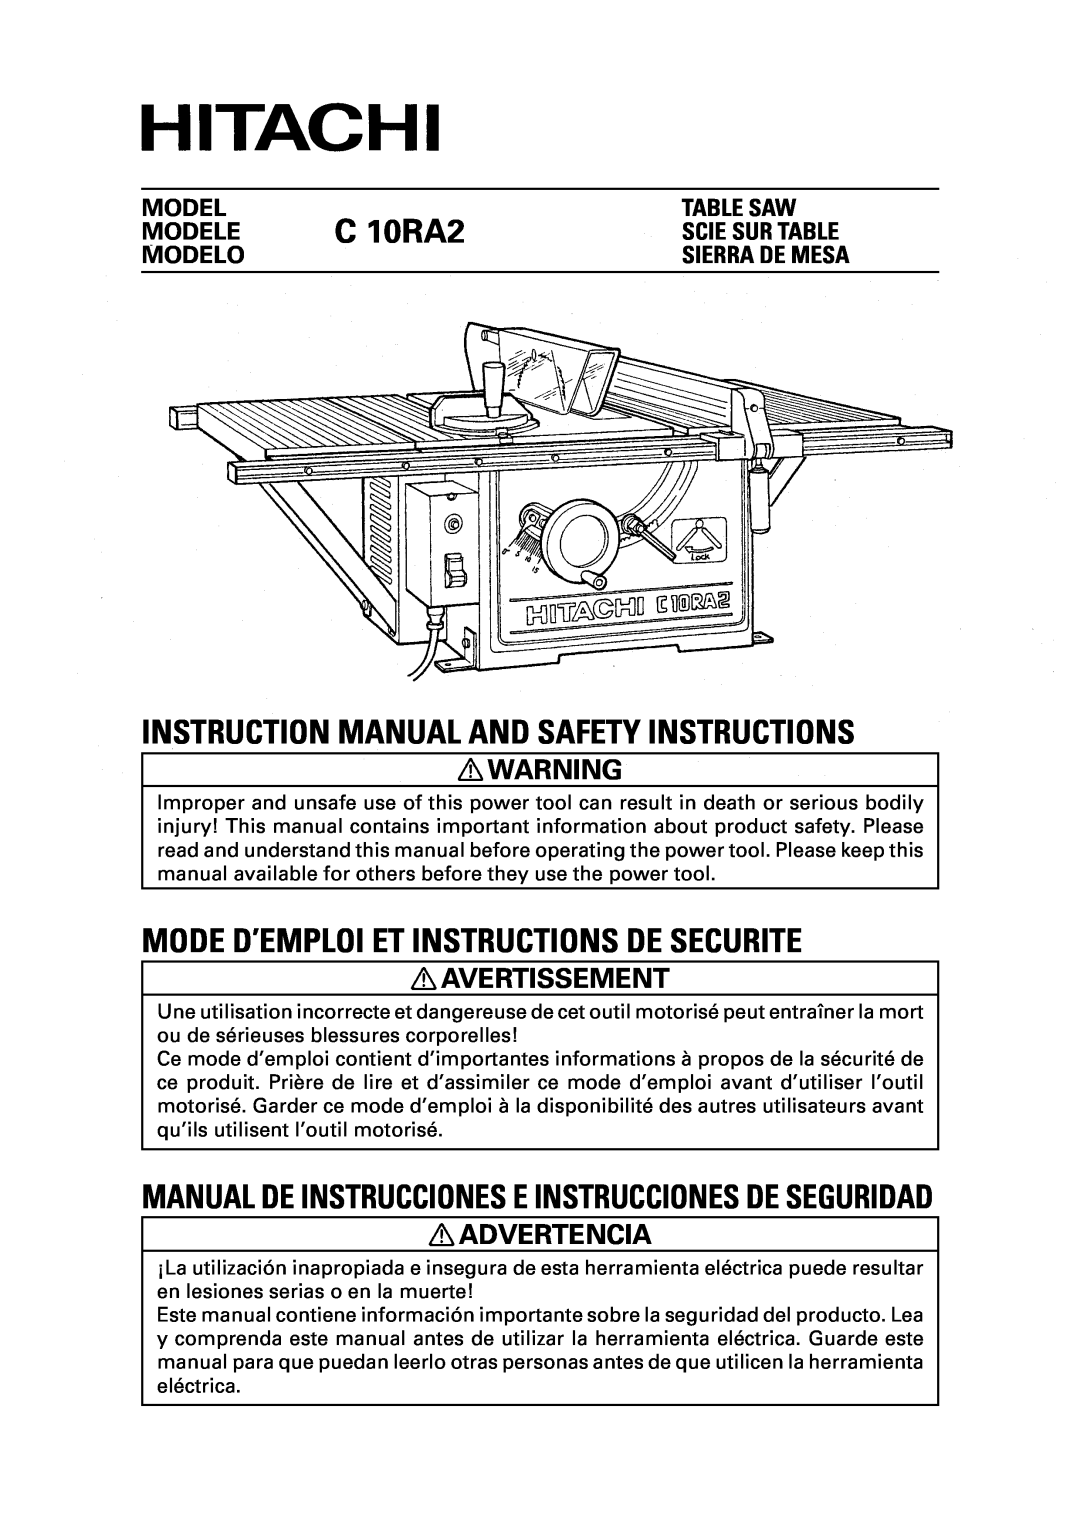 Hitachi C10RA2 instruction manual Avertissement, Advertencia, C 10RA2, Instruction Manual And Safety Instructions, Model 